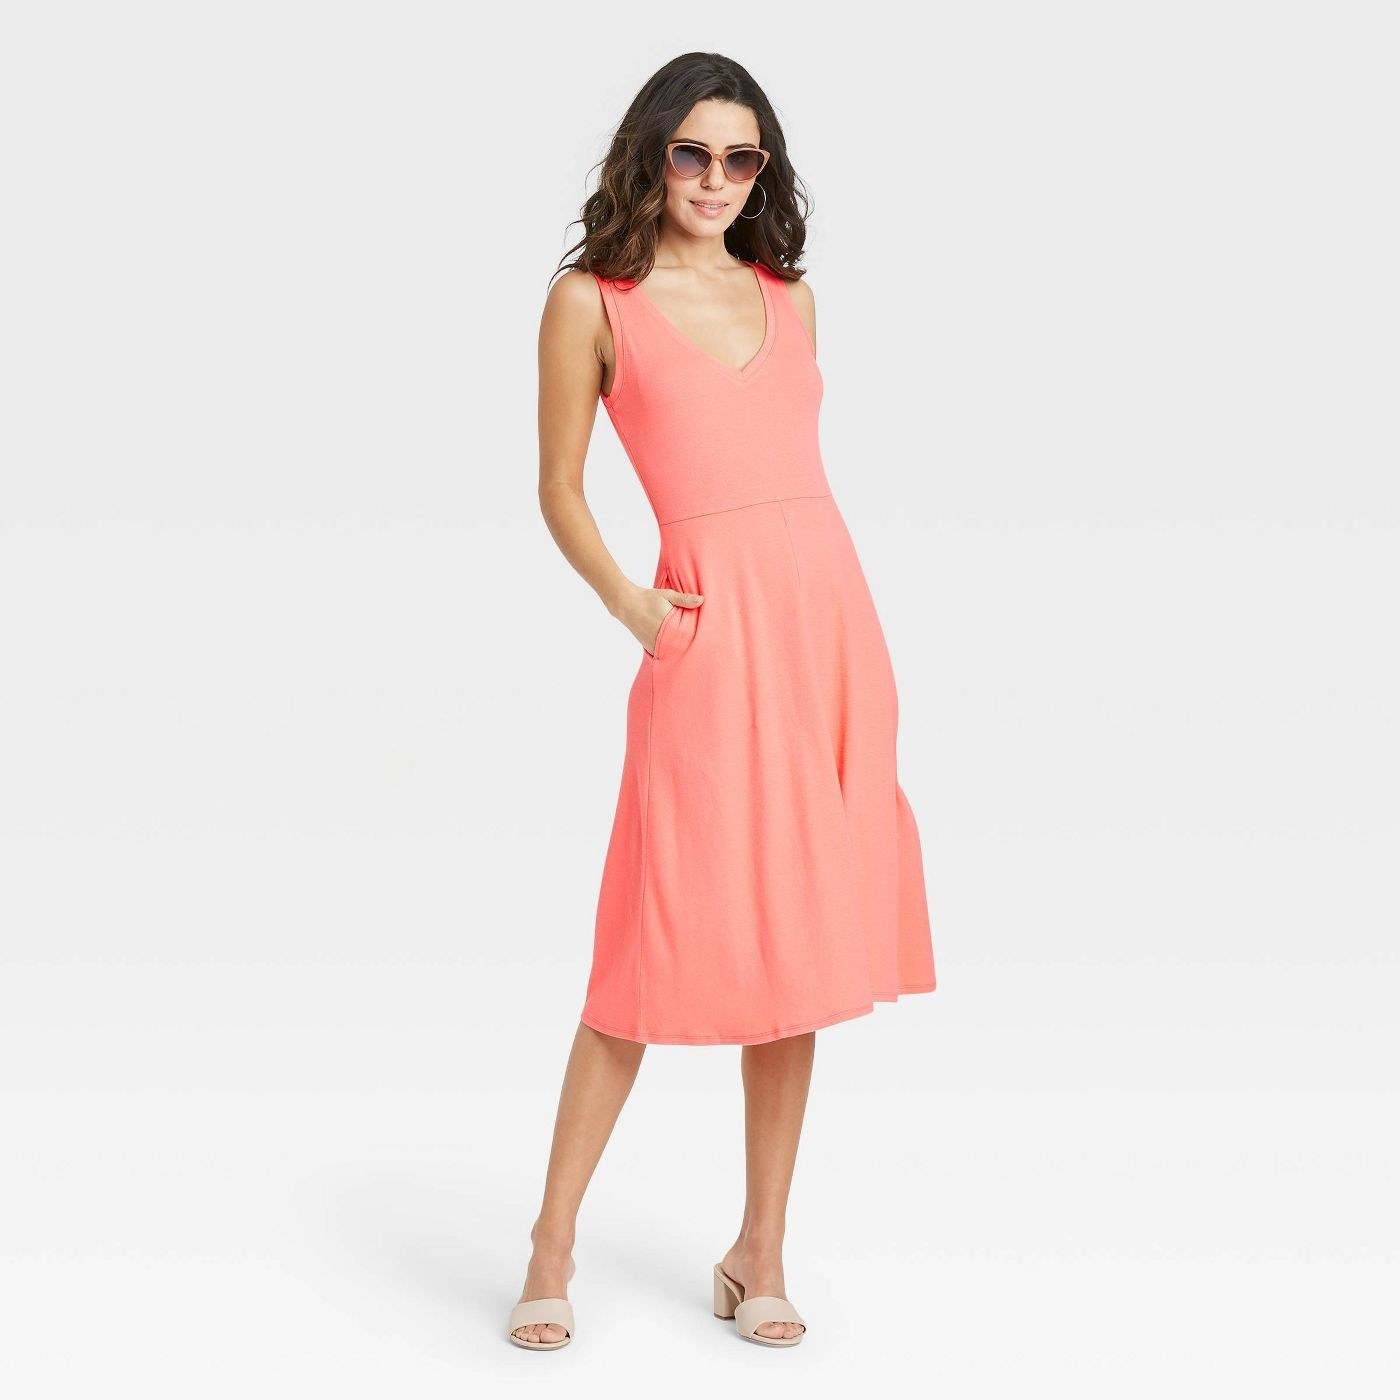 A model wearing a peach tank dress